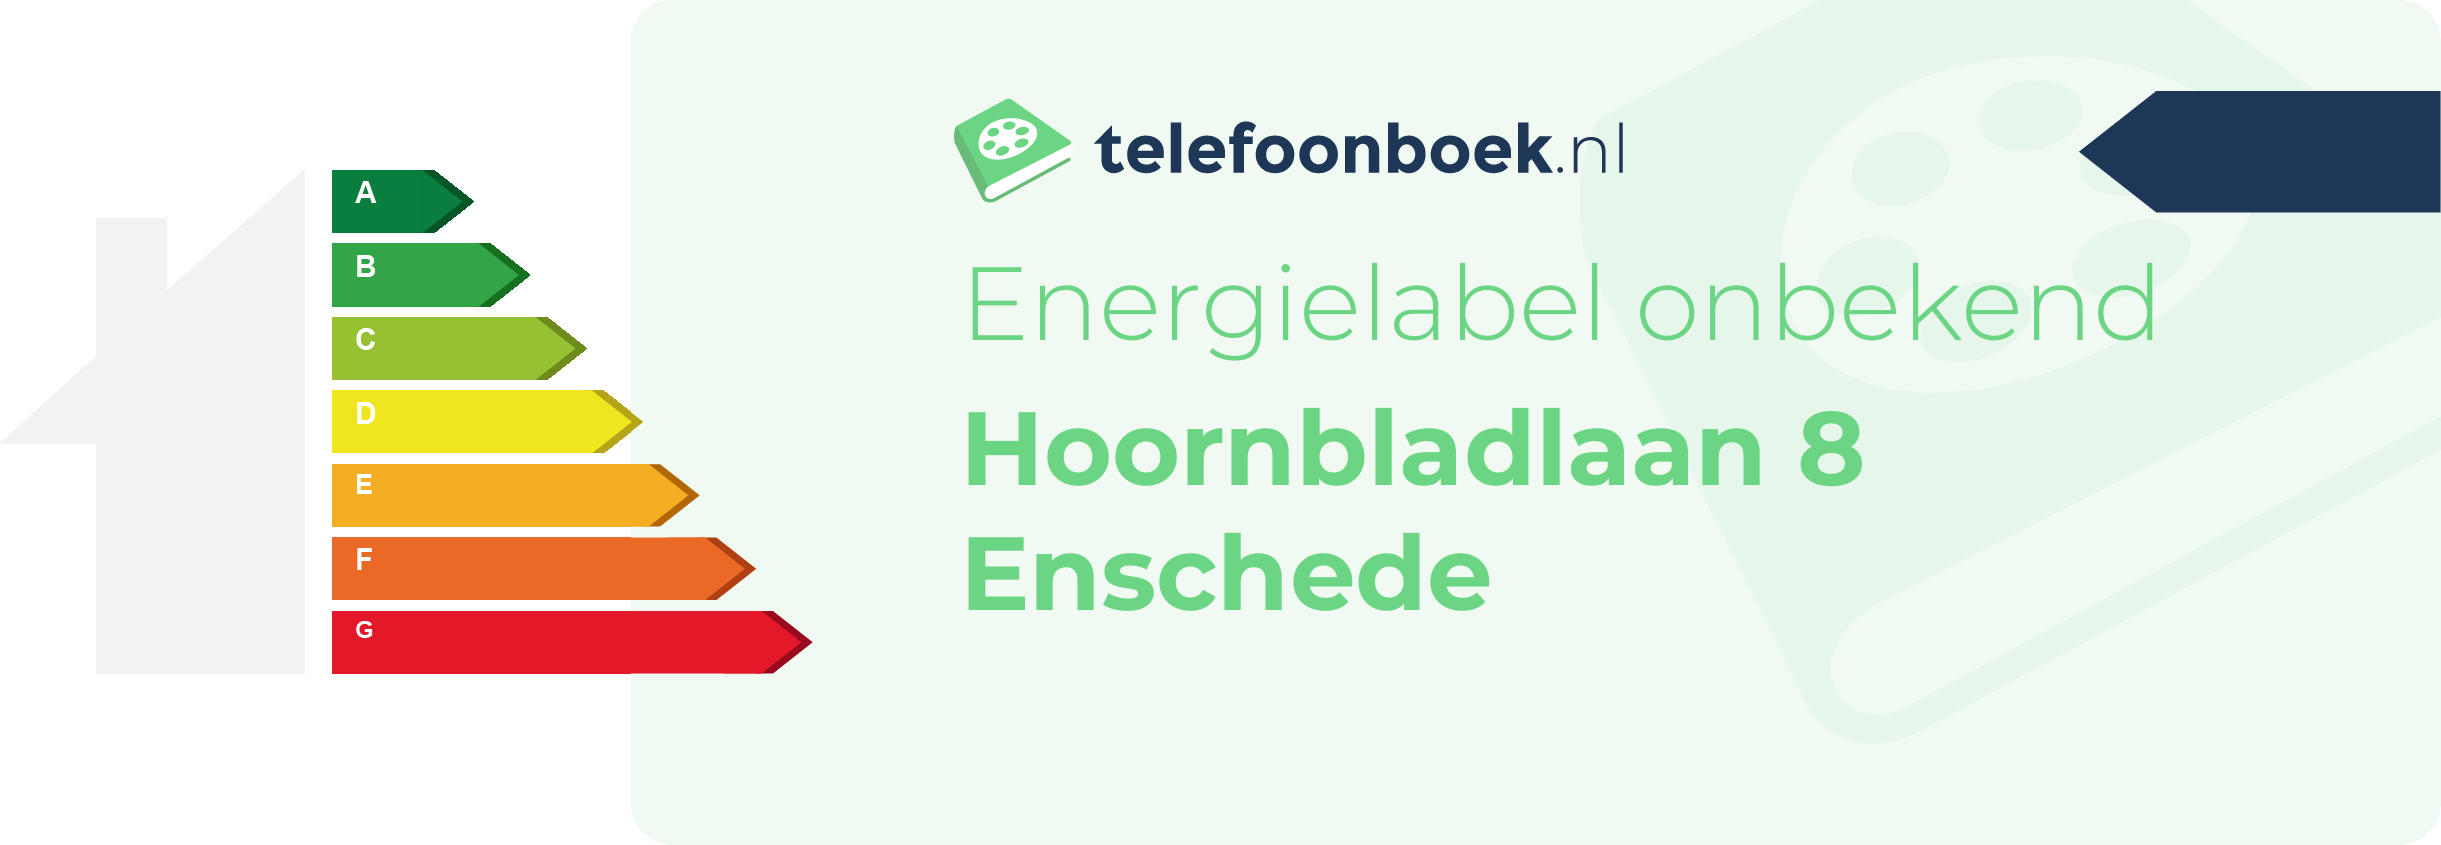 Energielabel Hoornbladlaan 8 Enschede